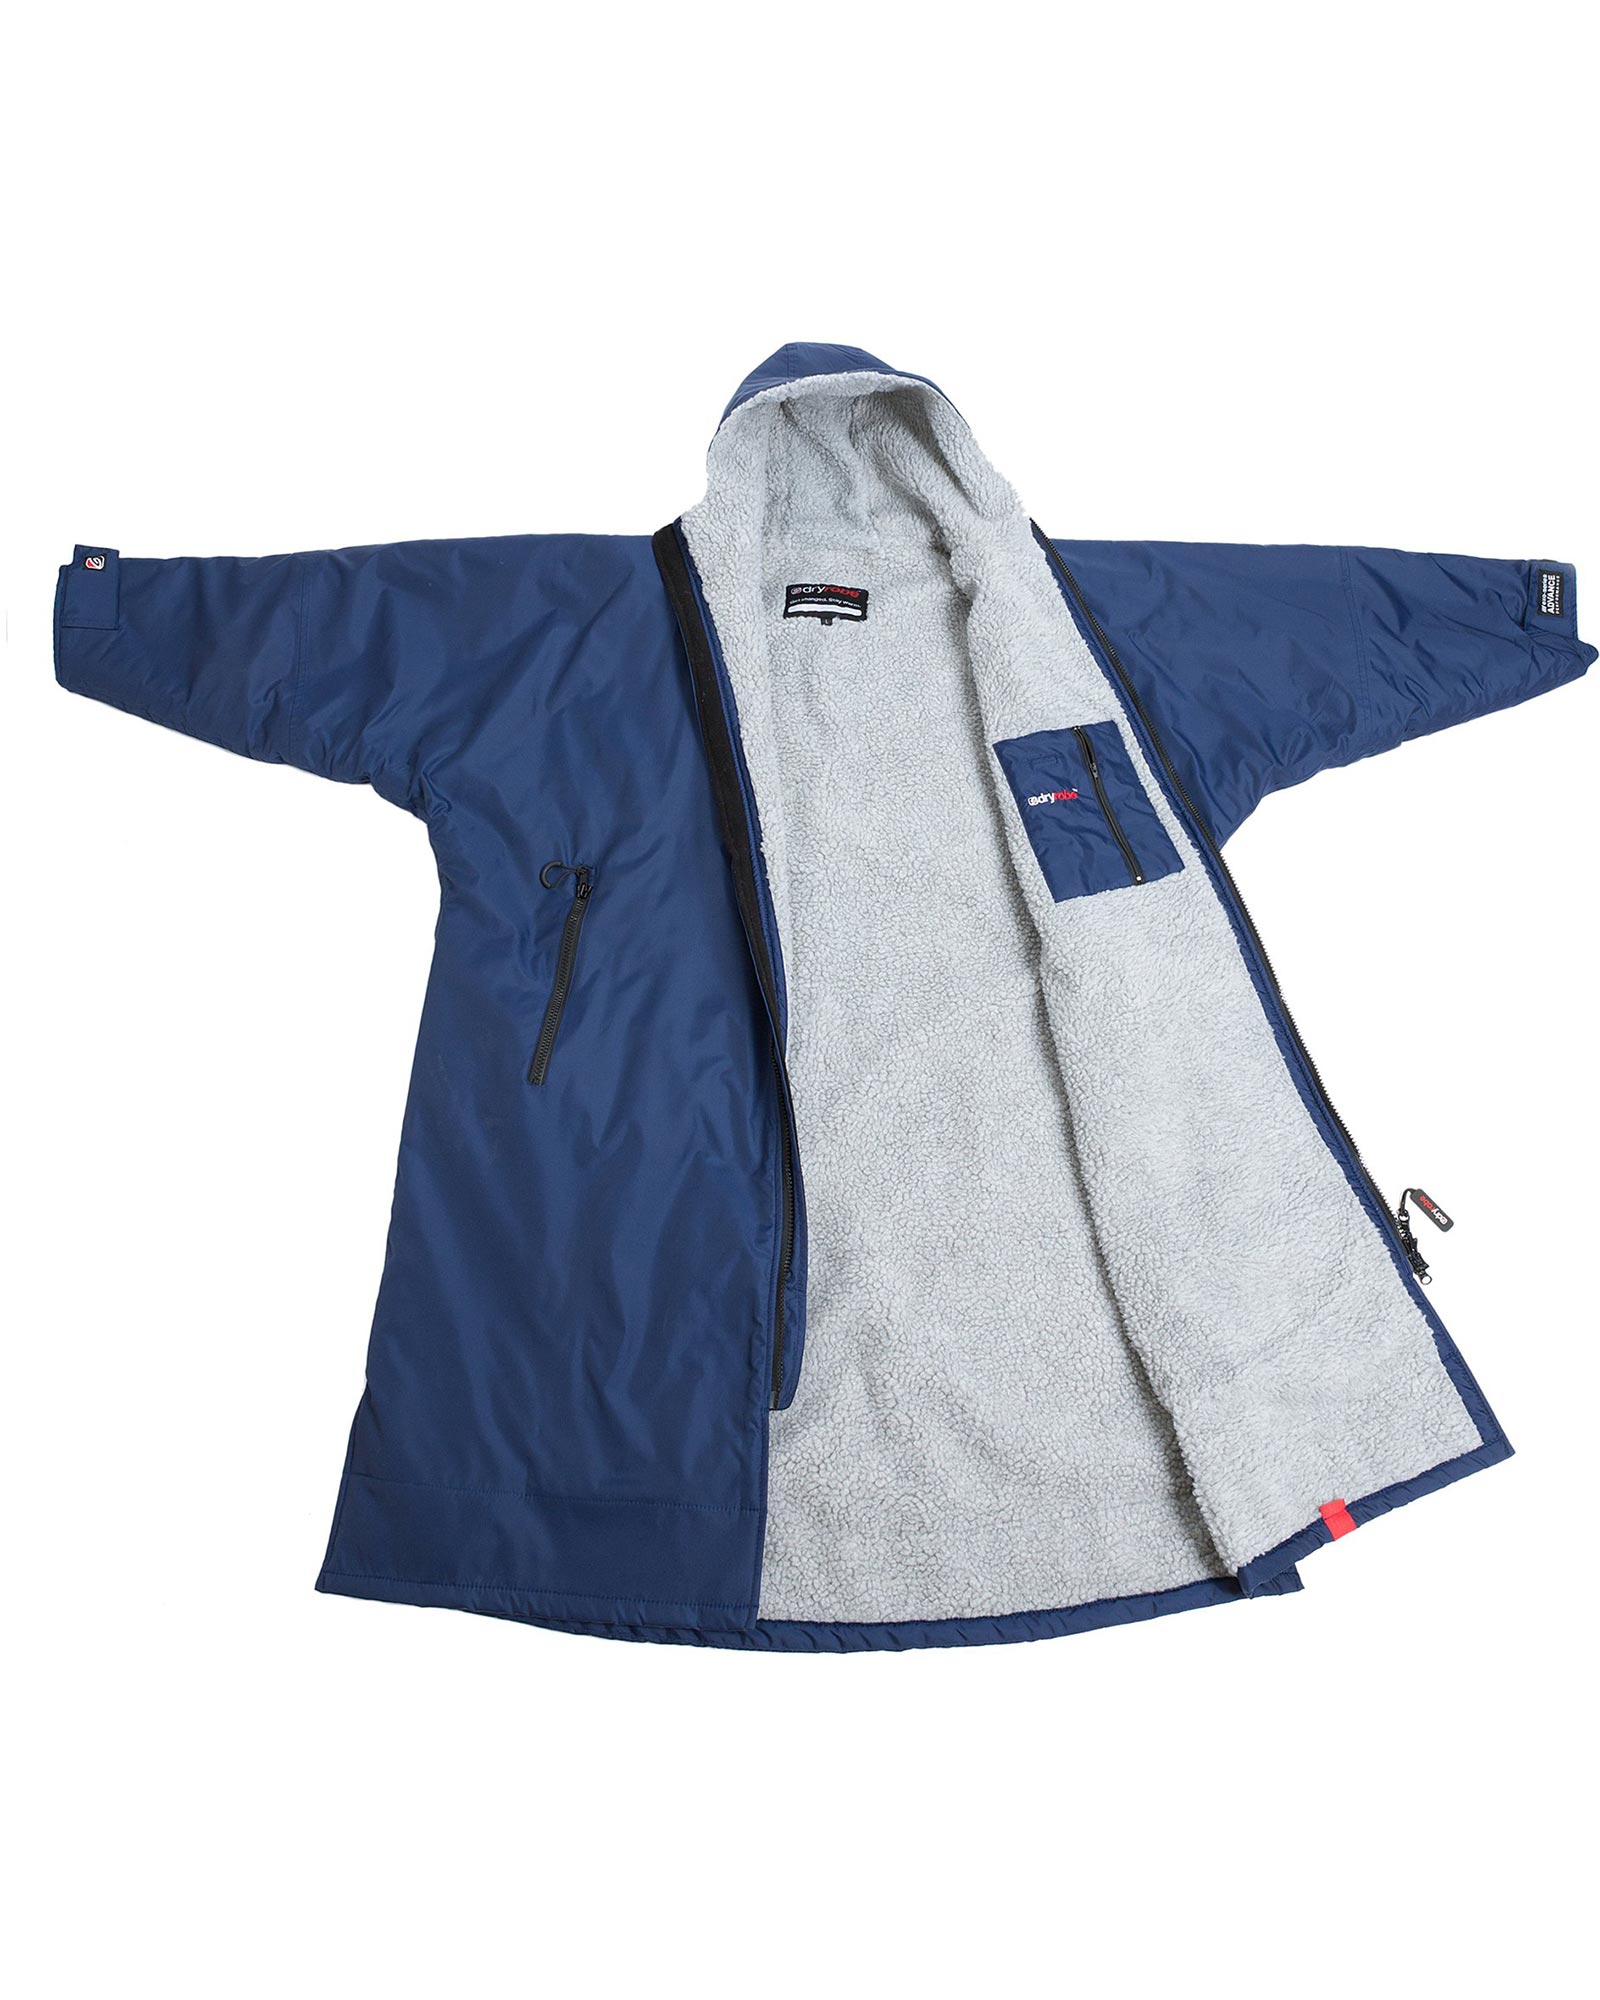 Dryrobe Advance Long Sleeve Changing Robe | Navy & Grey | M